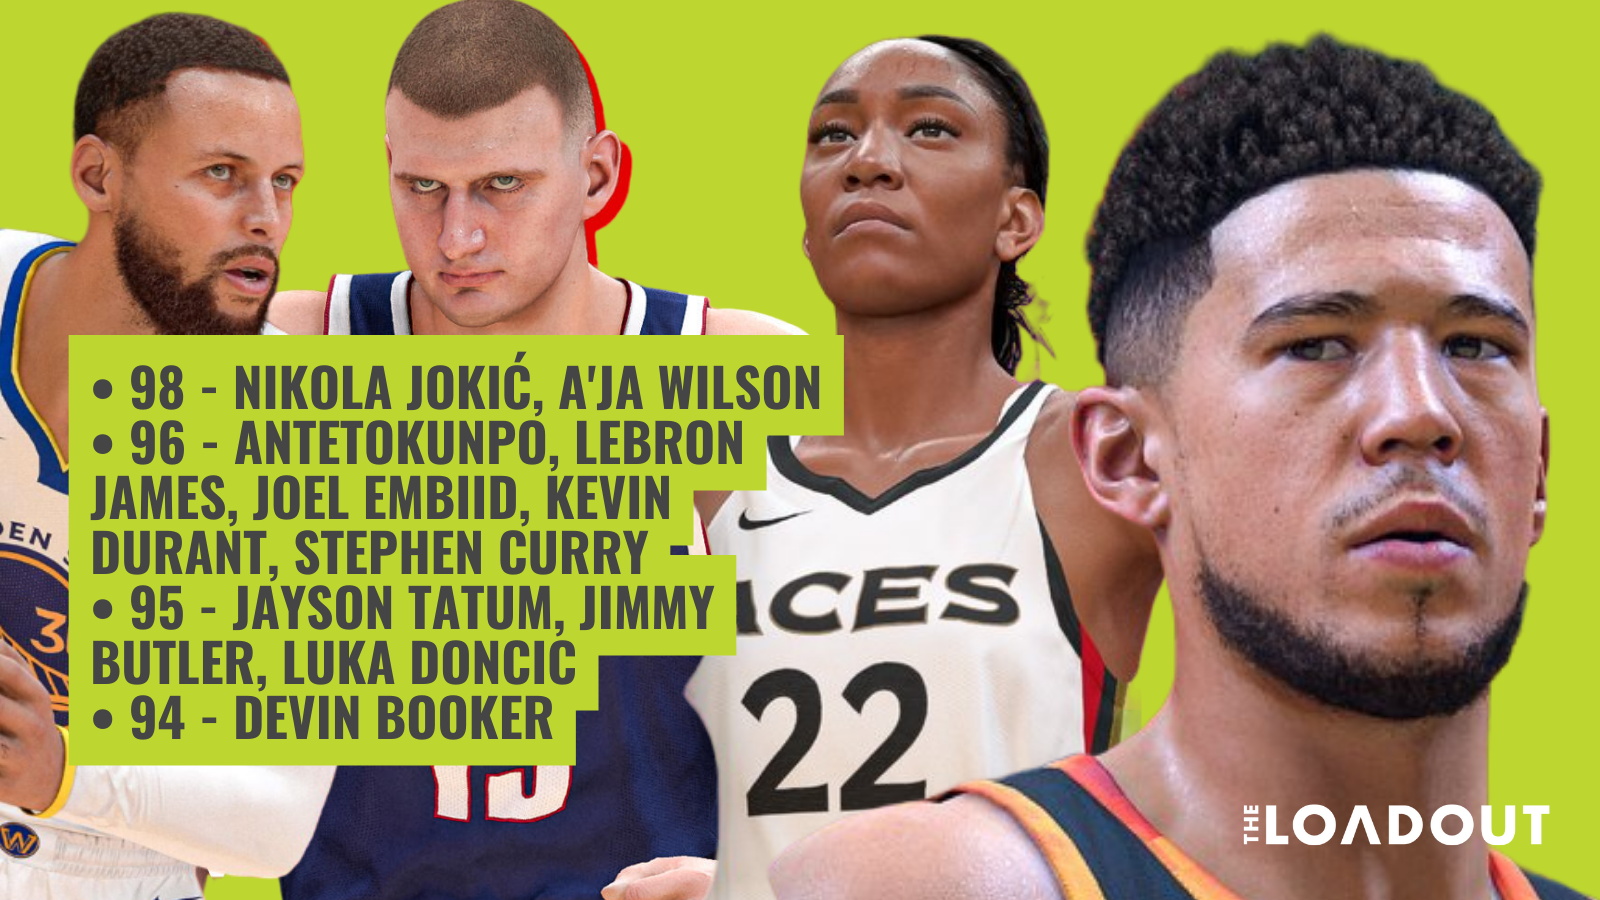 Damian Jones NBA 2K24 Rating (Current Cleveland Cavaliers)